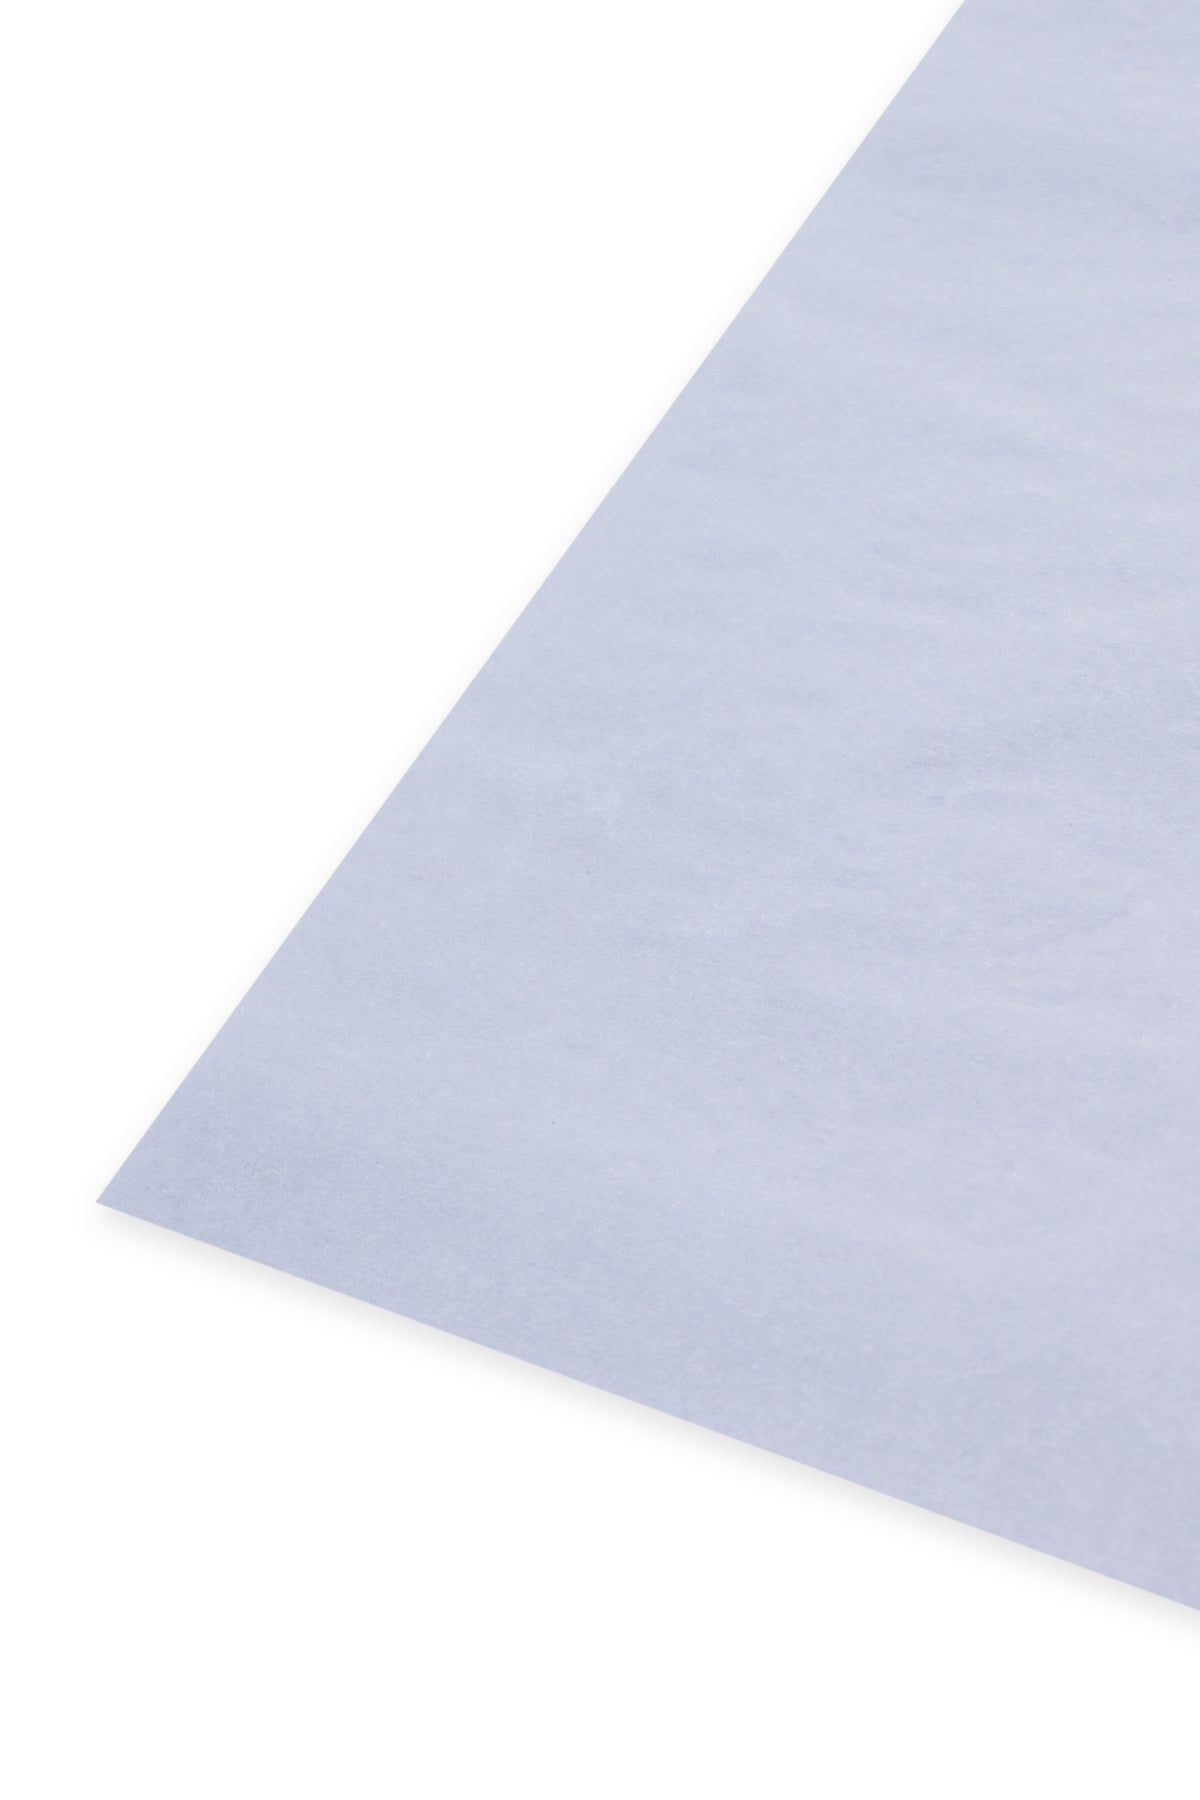 Plush Wrapping Paper - White